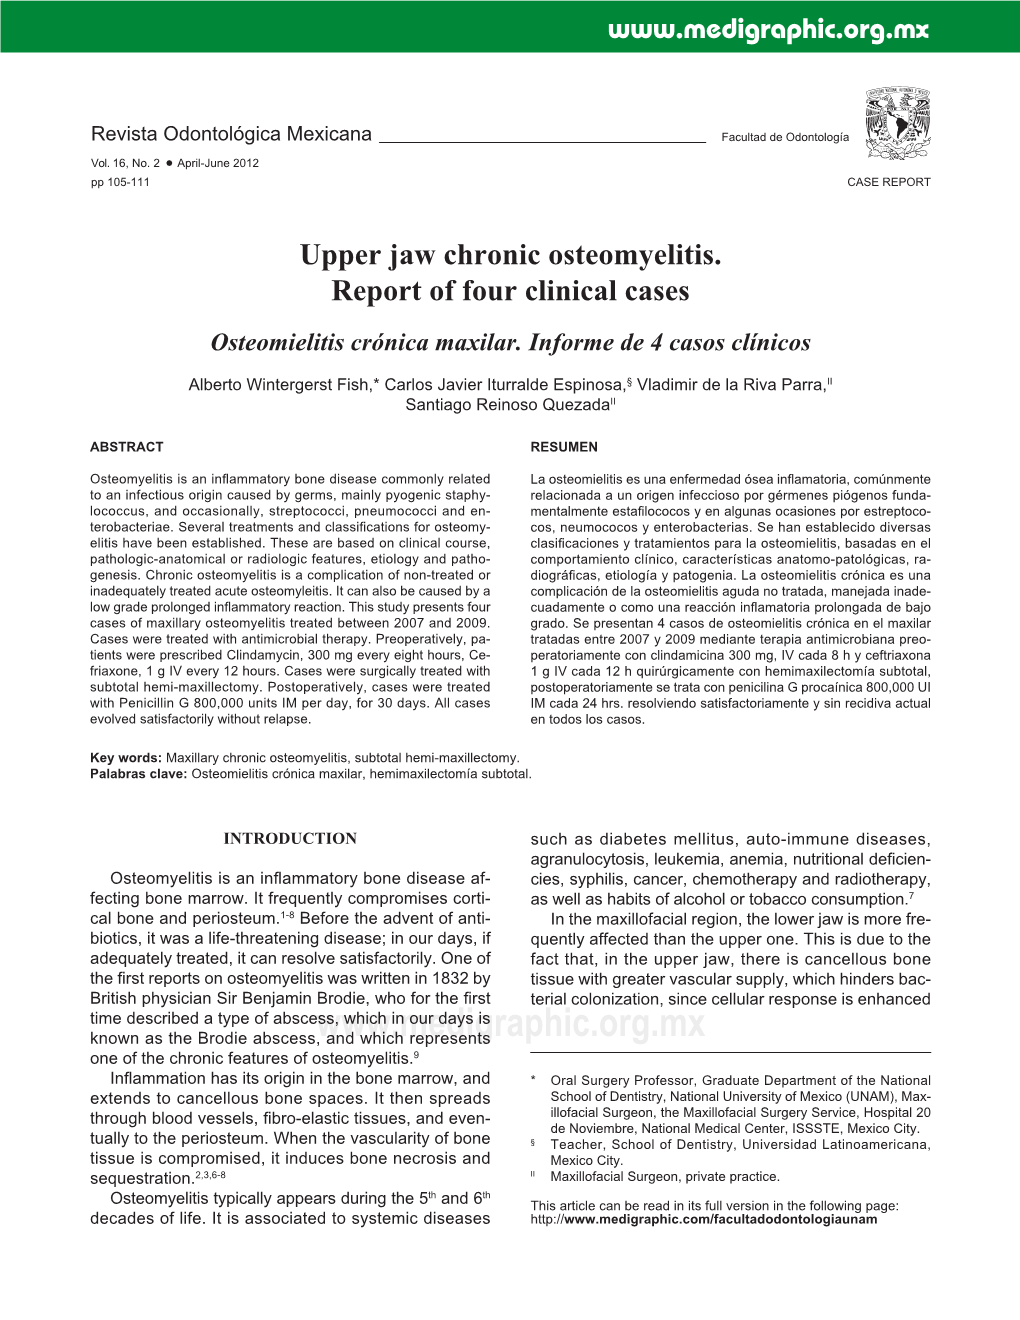 Upper Jaw Chronic Osteomyelitis. Report of Four Clinical Cases Osteomielitis Crónica Maxilar